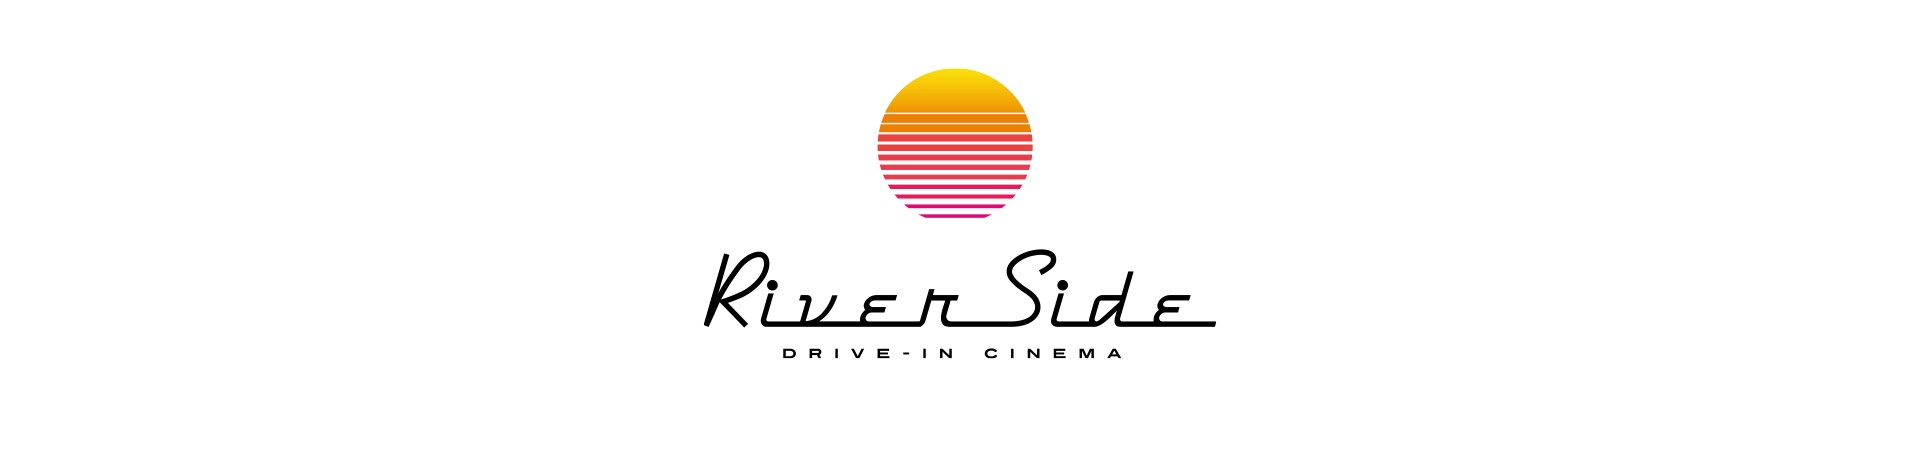 Riverside Cinema